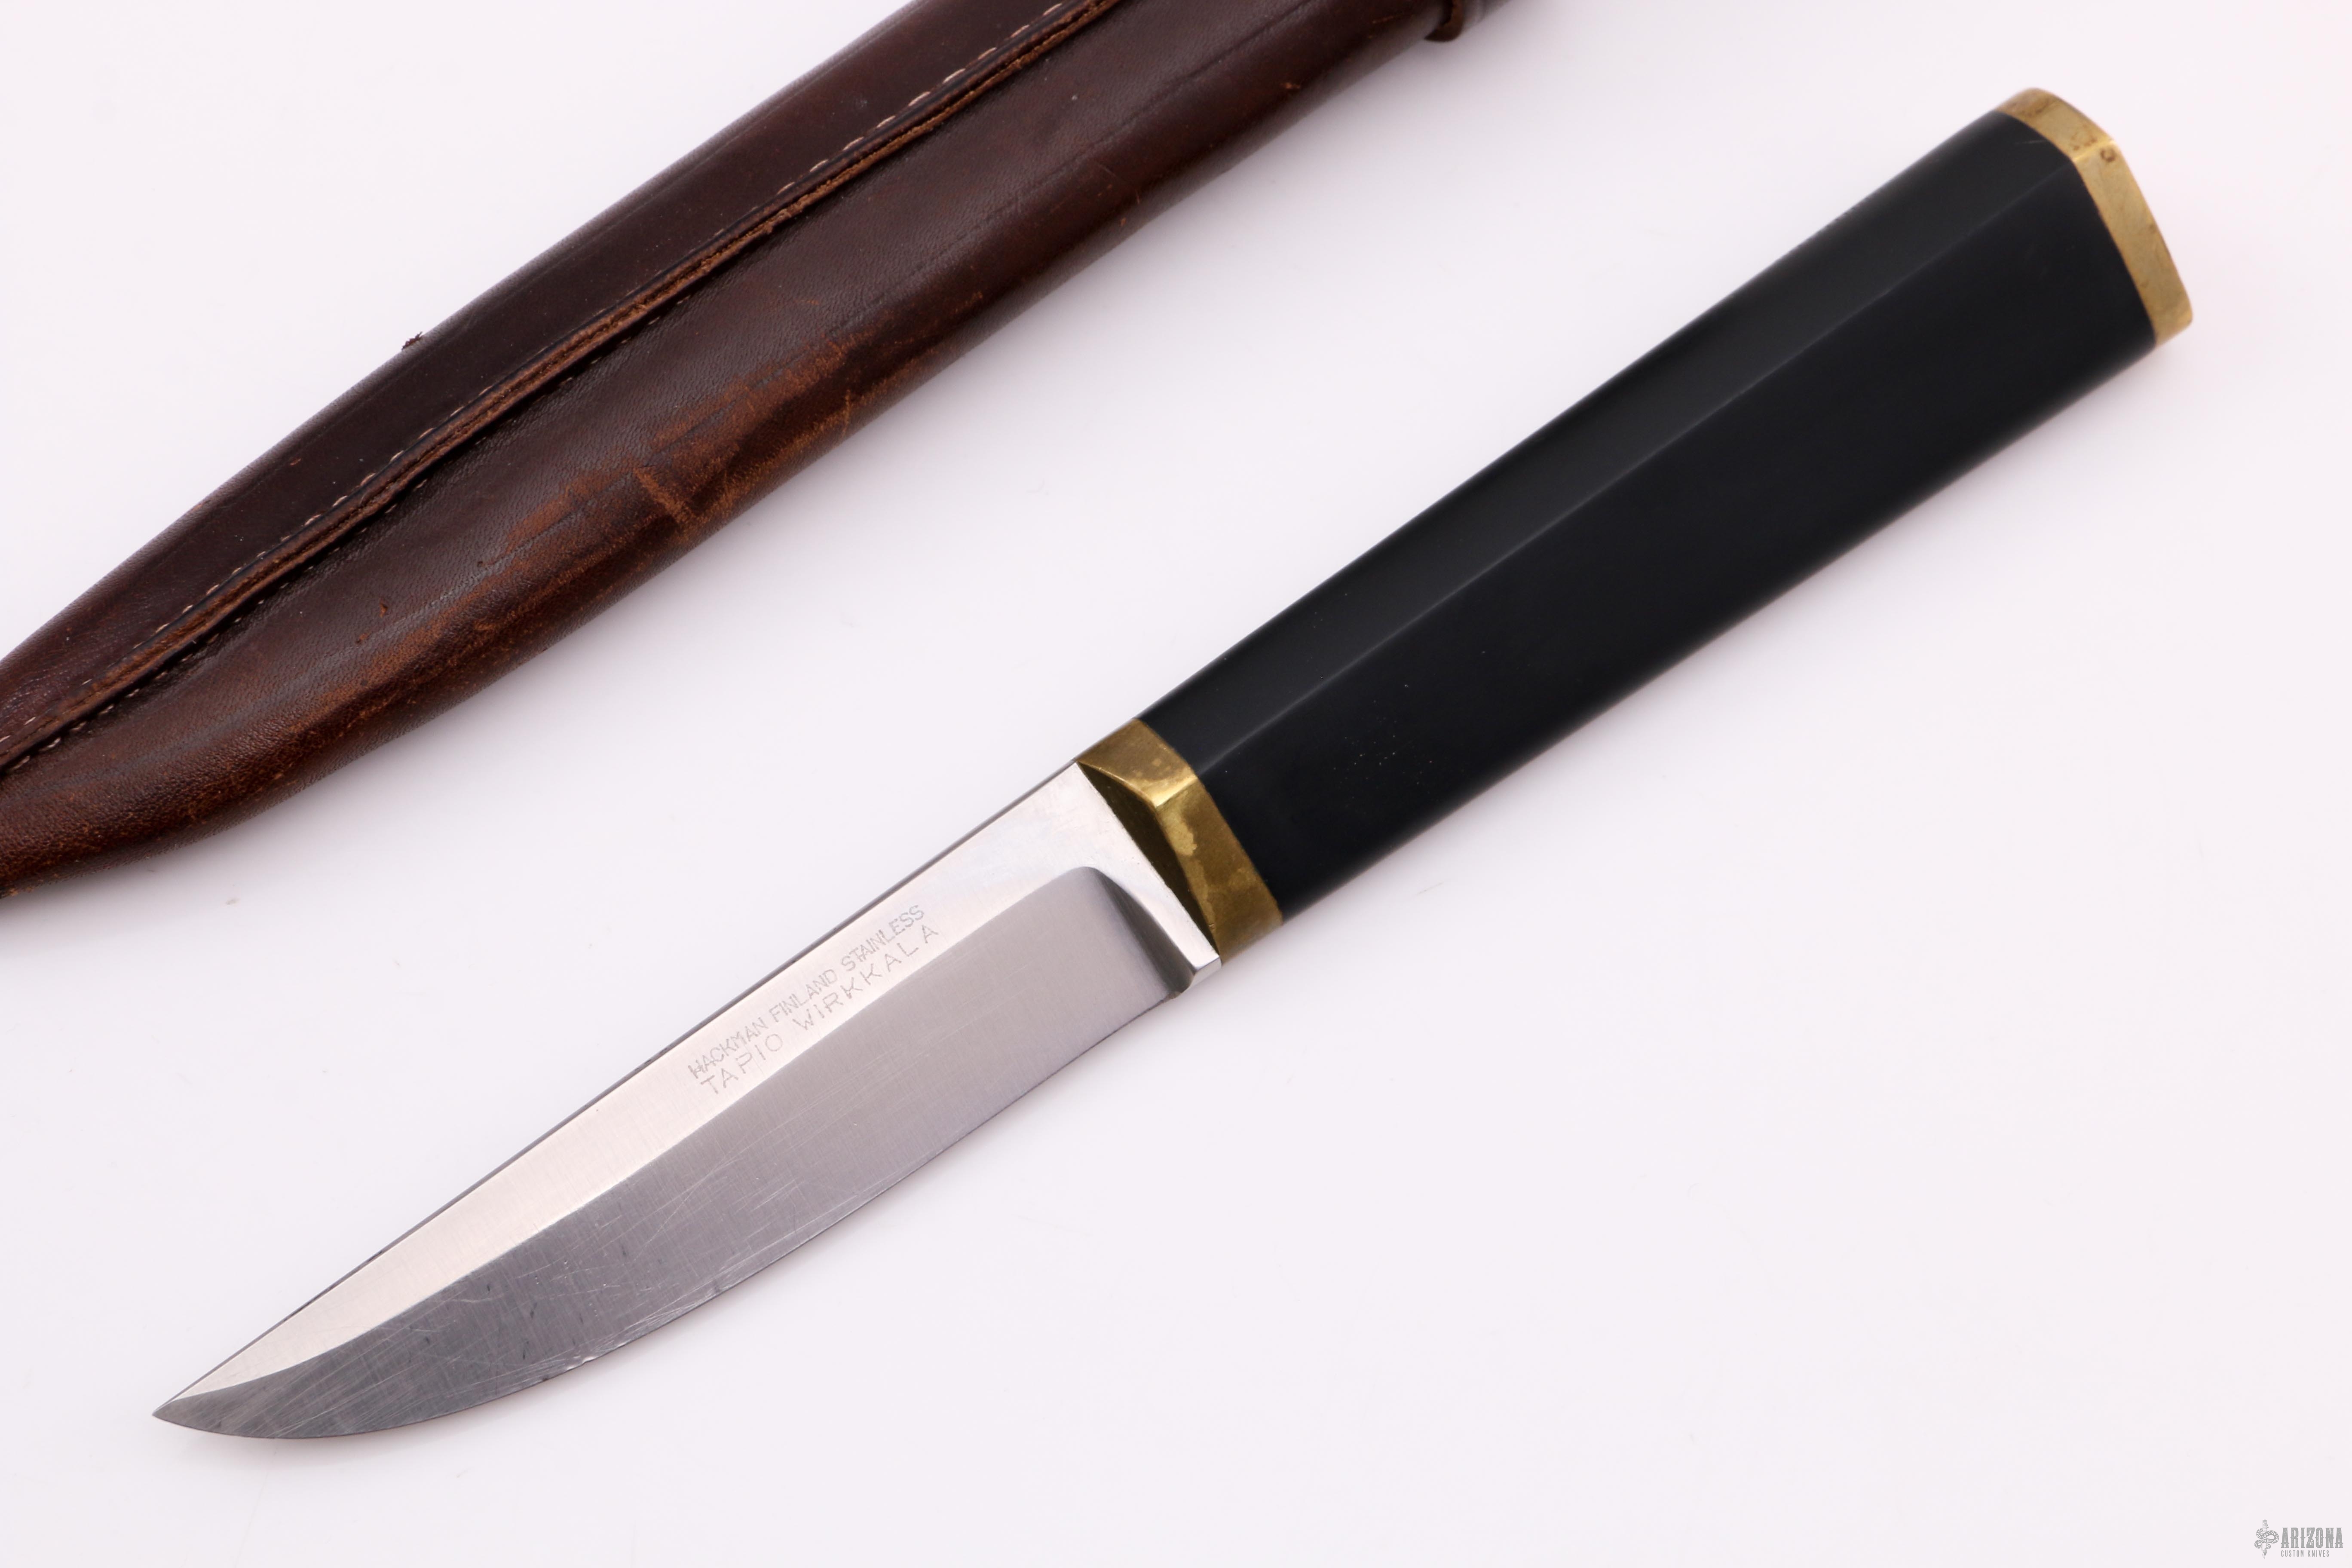 Tapio Wirkkala Design | Arizona Custom Knives